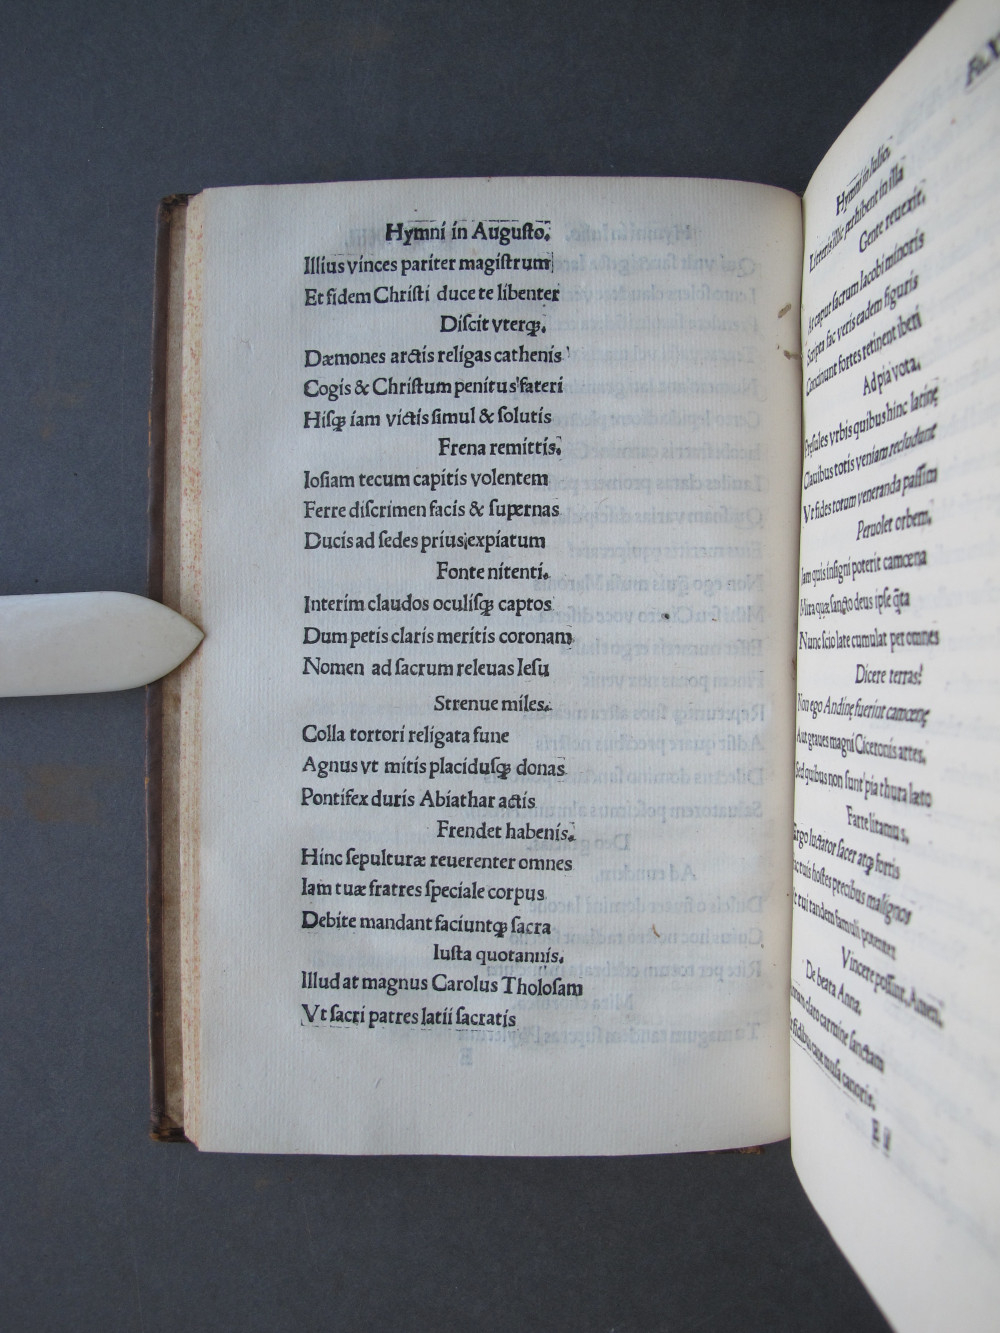 Folio 33 verso